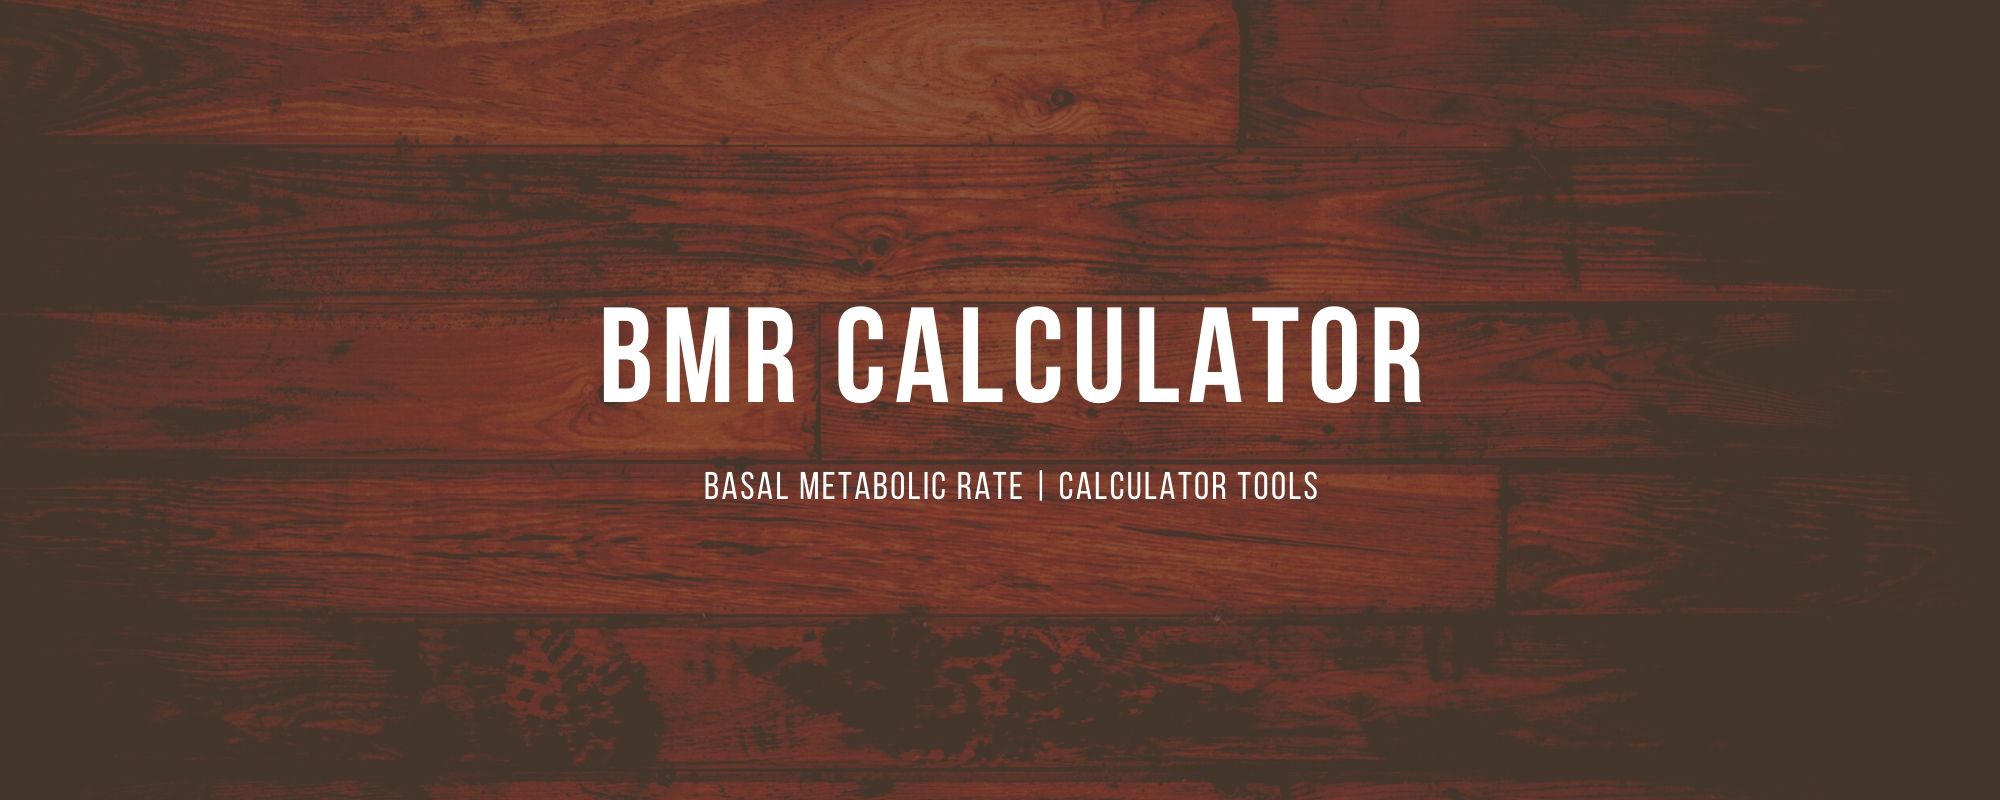 bmr calculator myfitnesspal